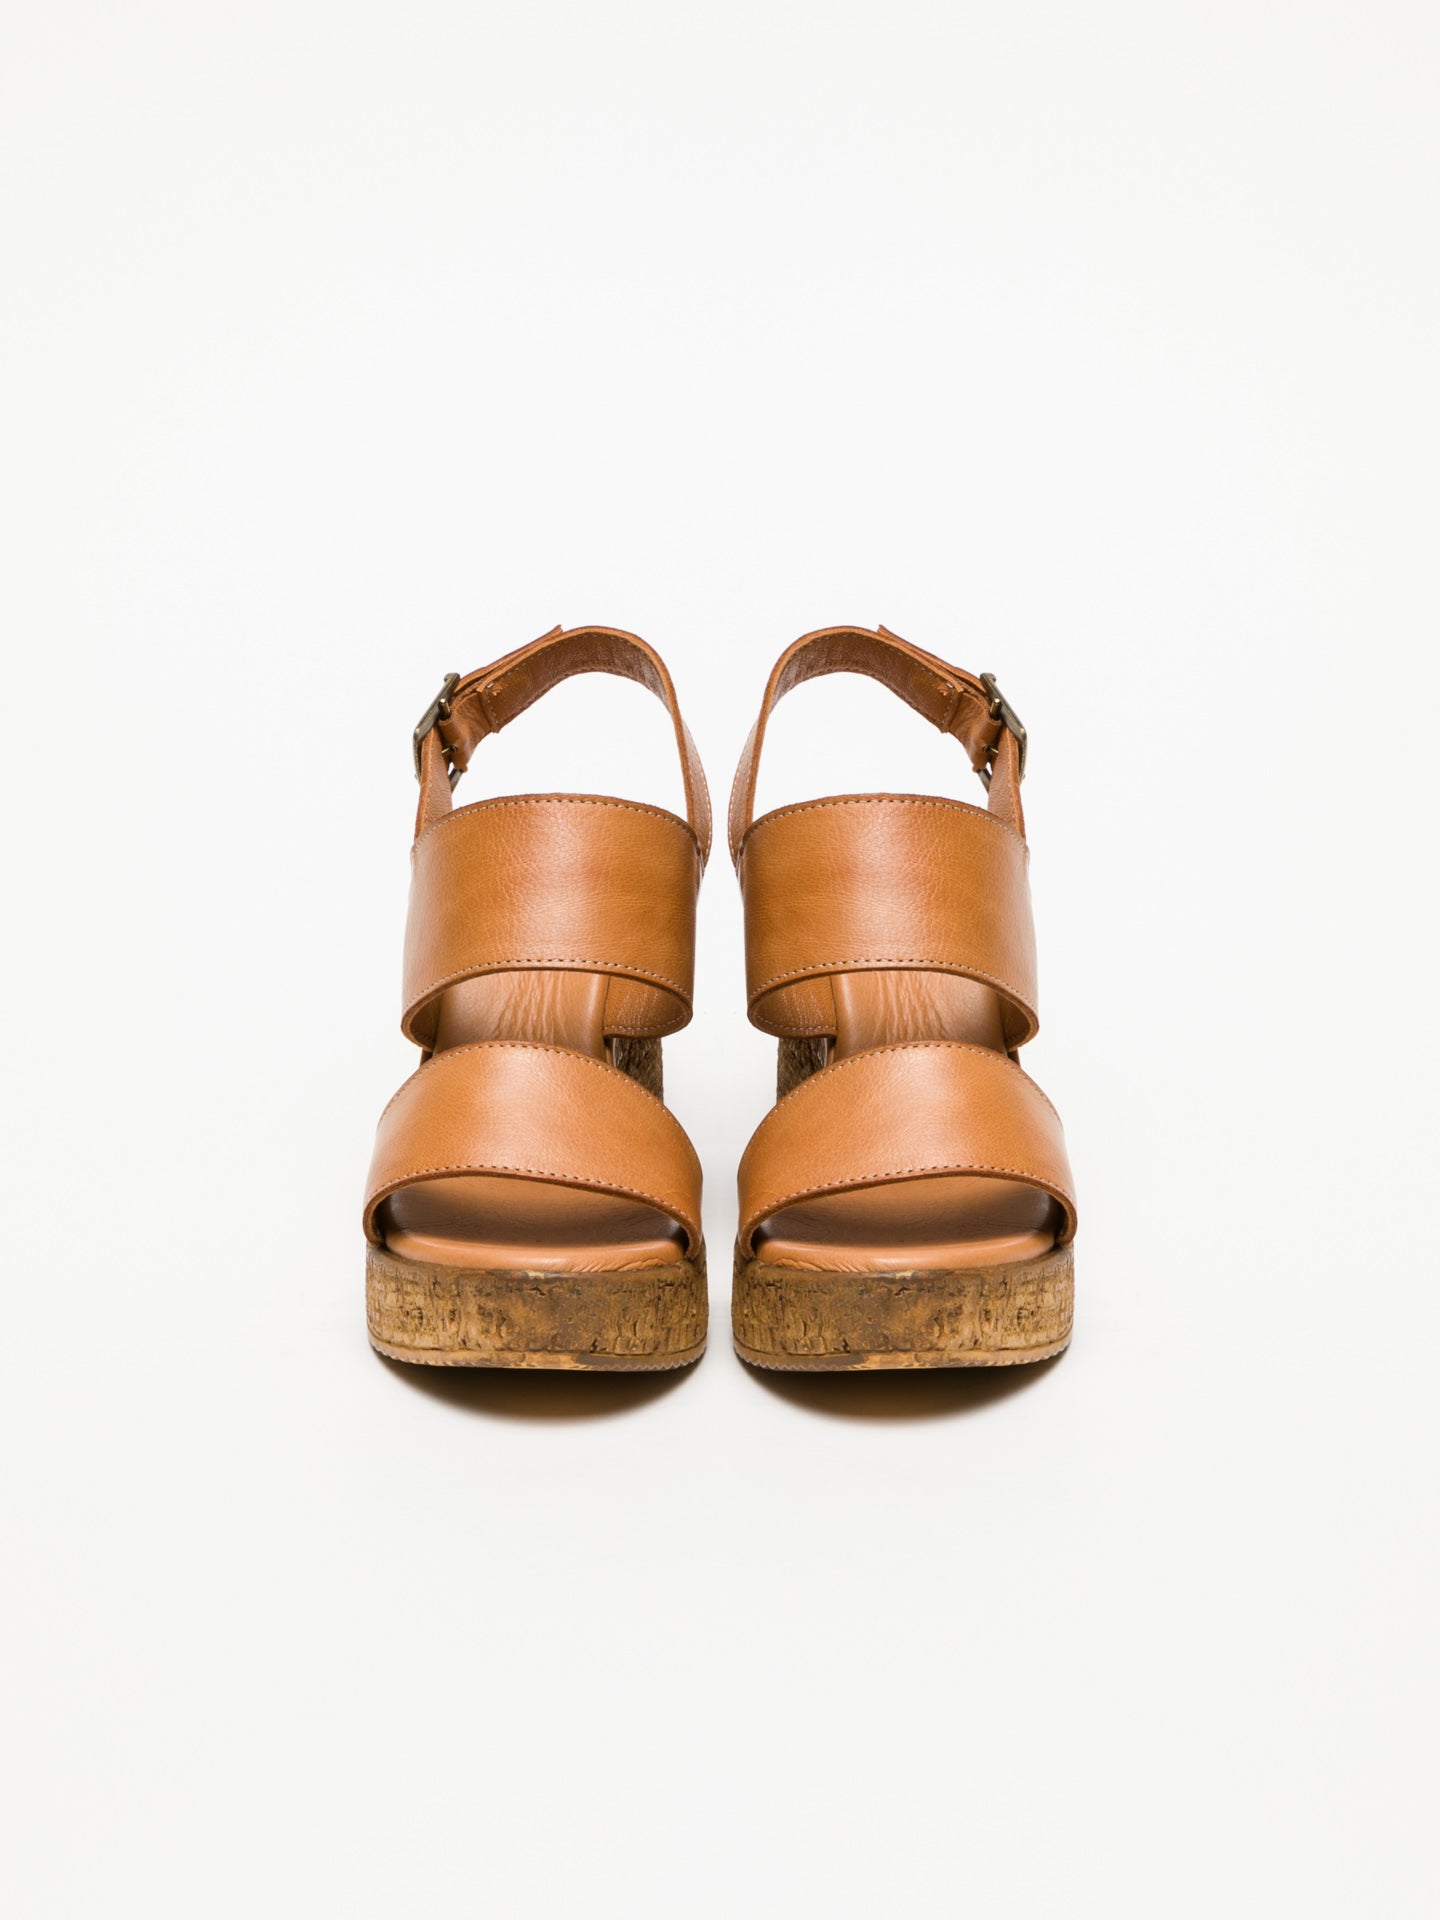 Foreva Peru Strappy Sandals